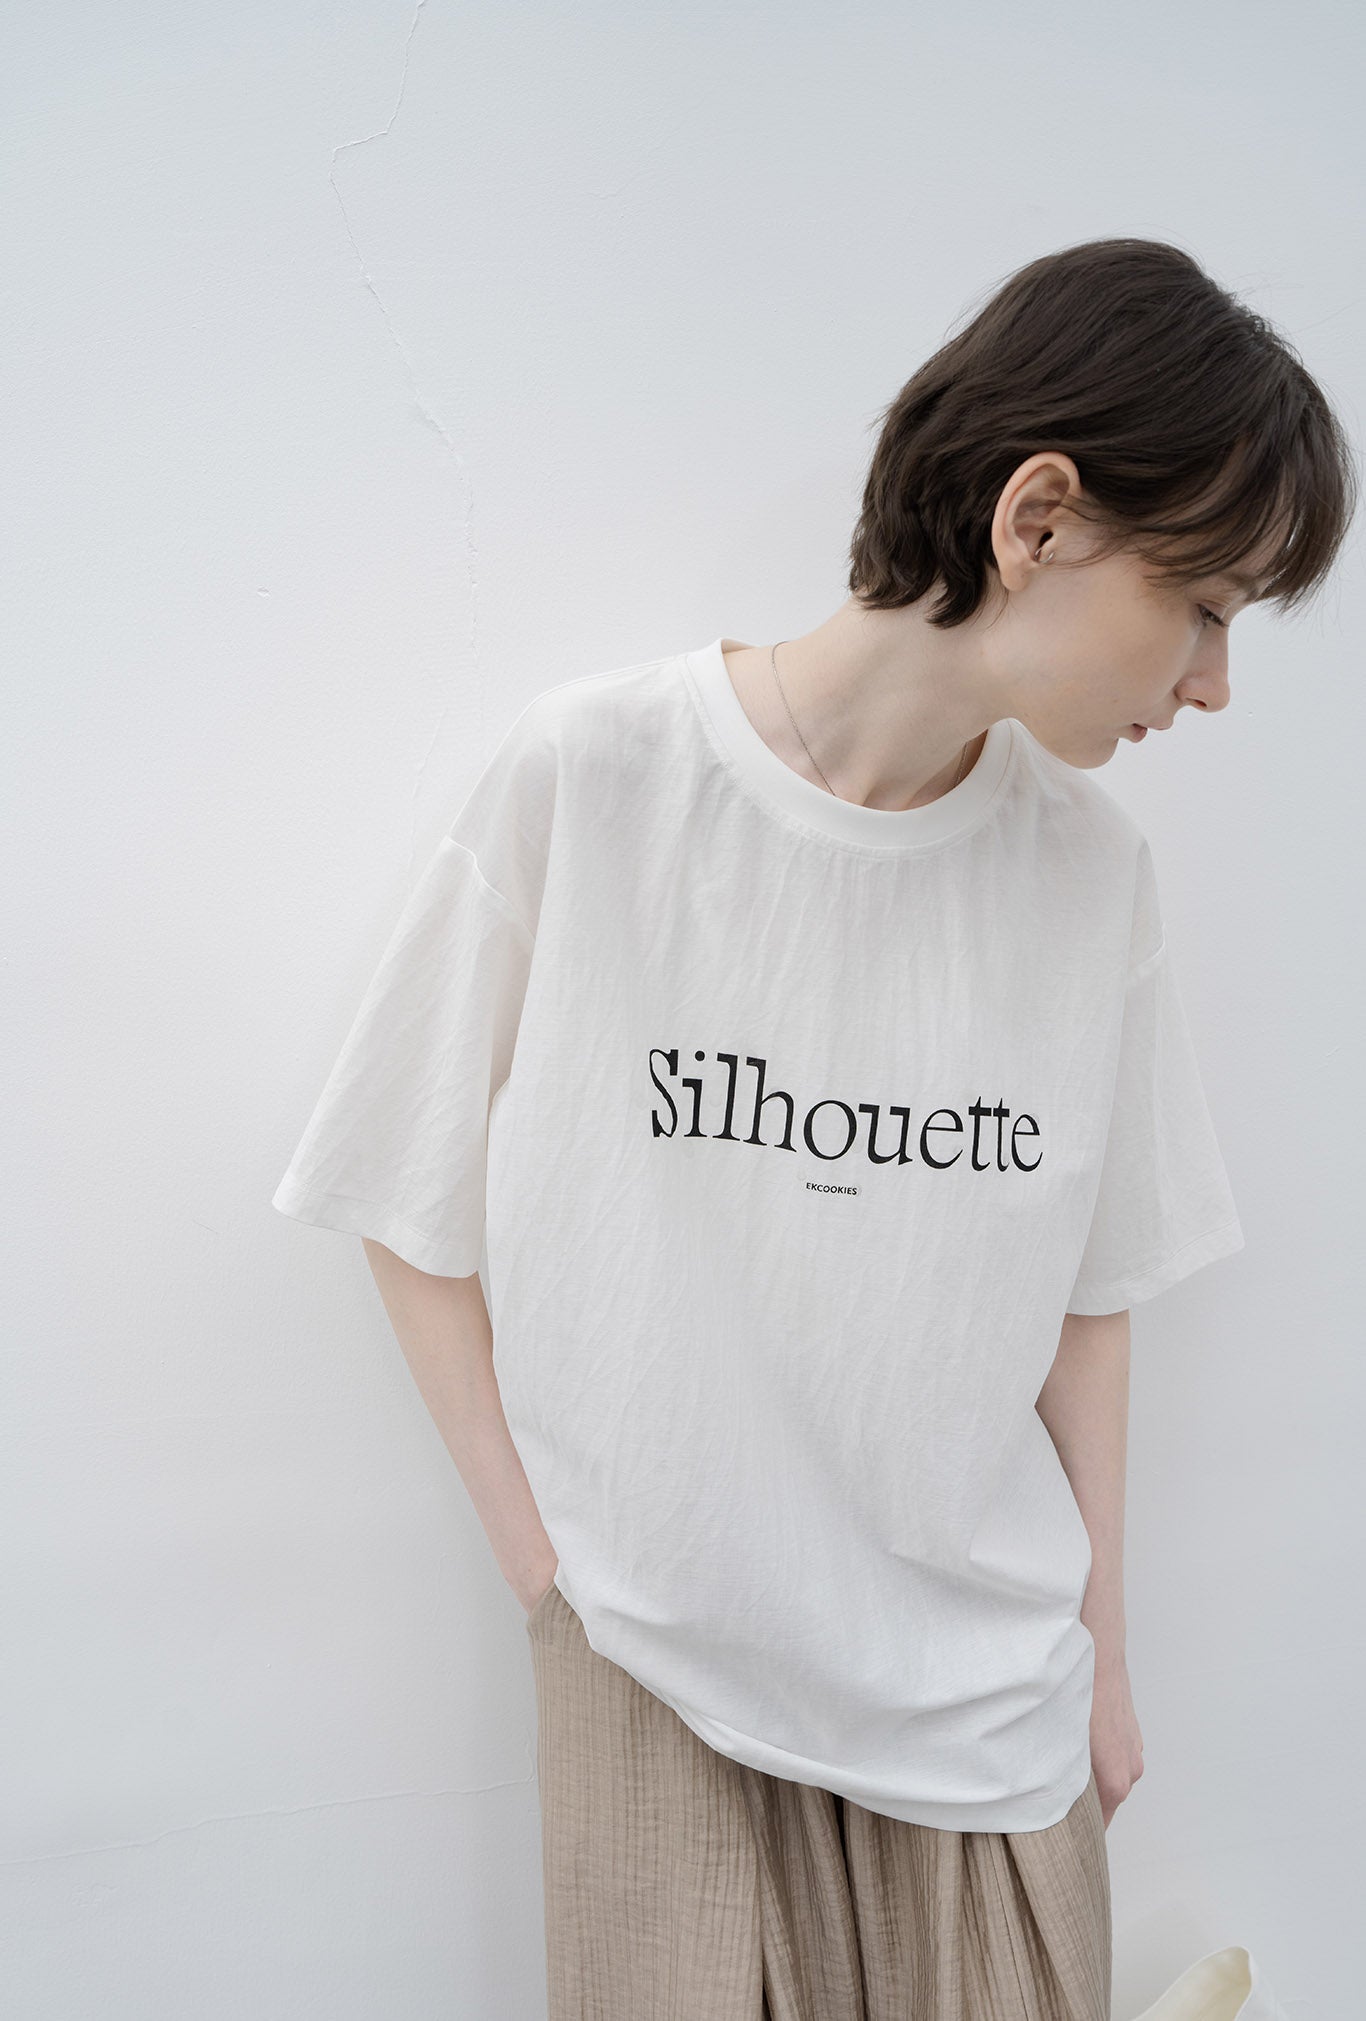 "silhouette" 프린트 컷소우 / T셔츠